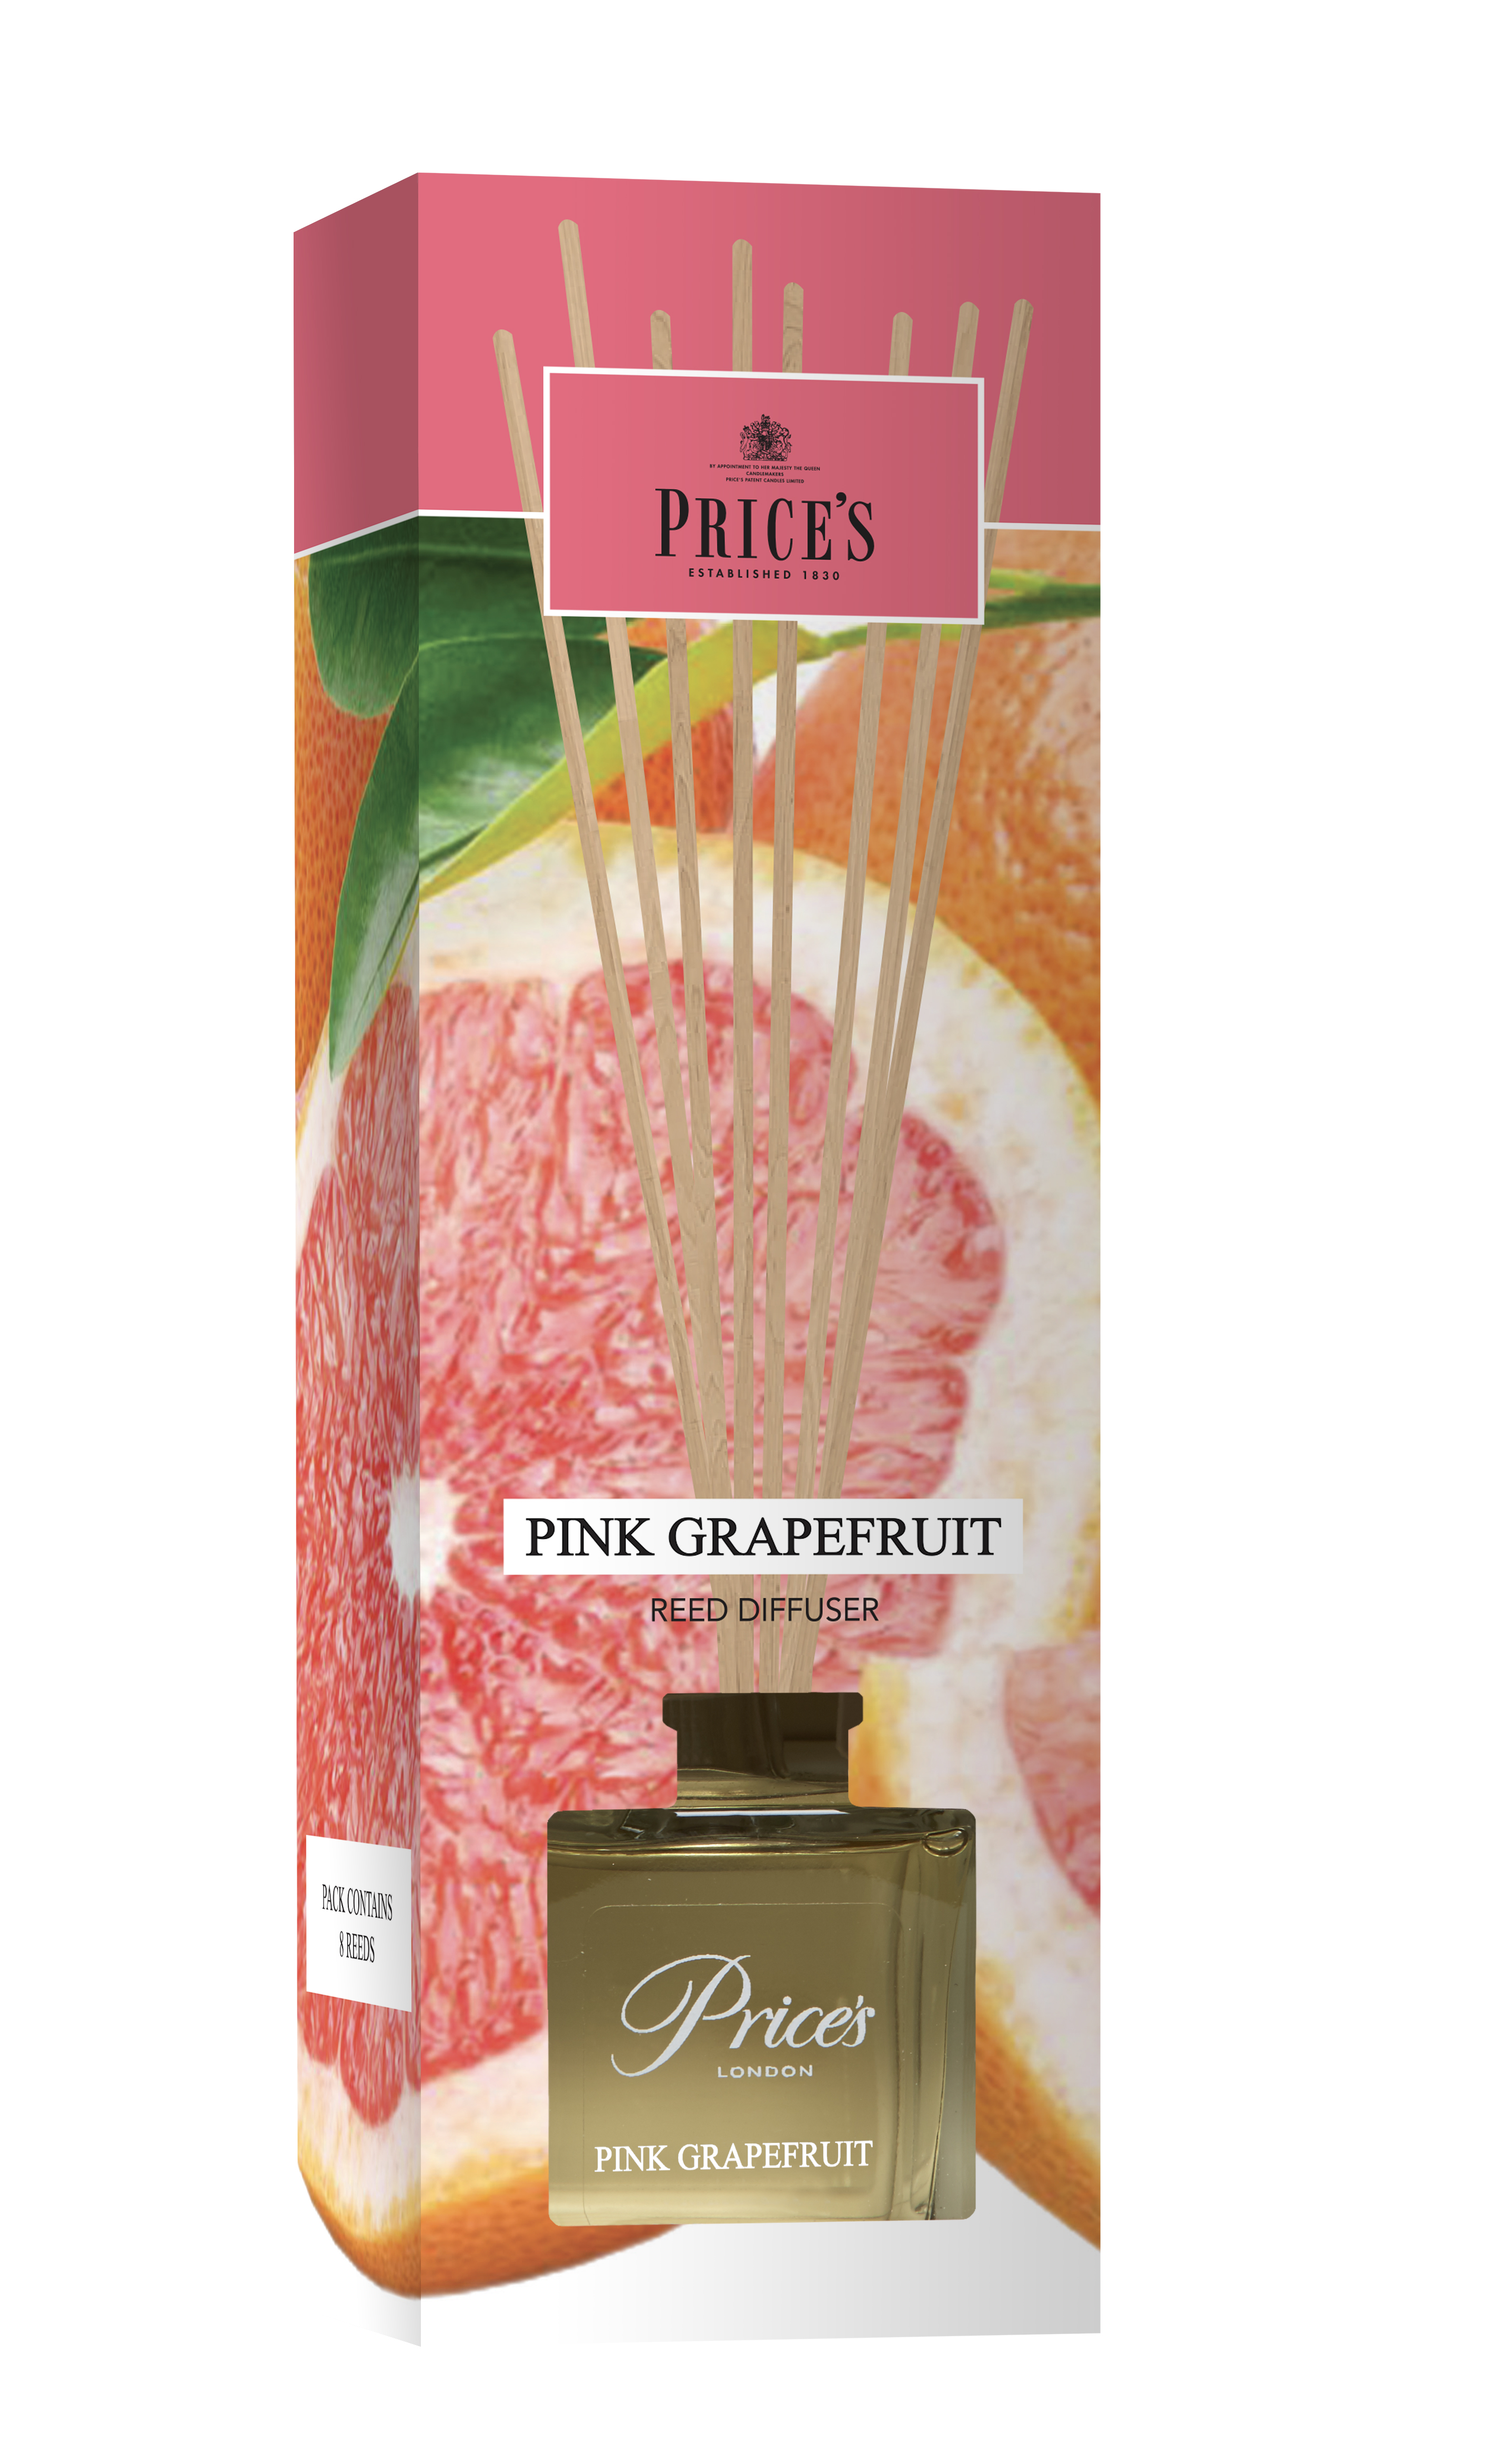 Prices Raumduft "Pink Grapefruit" 100ml     